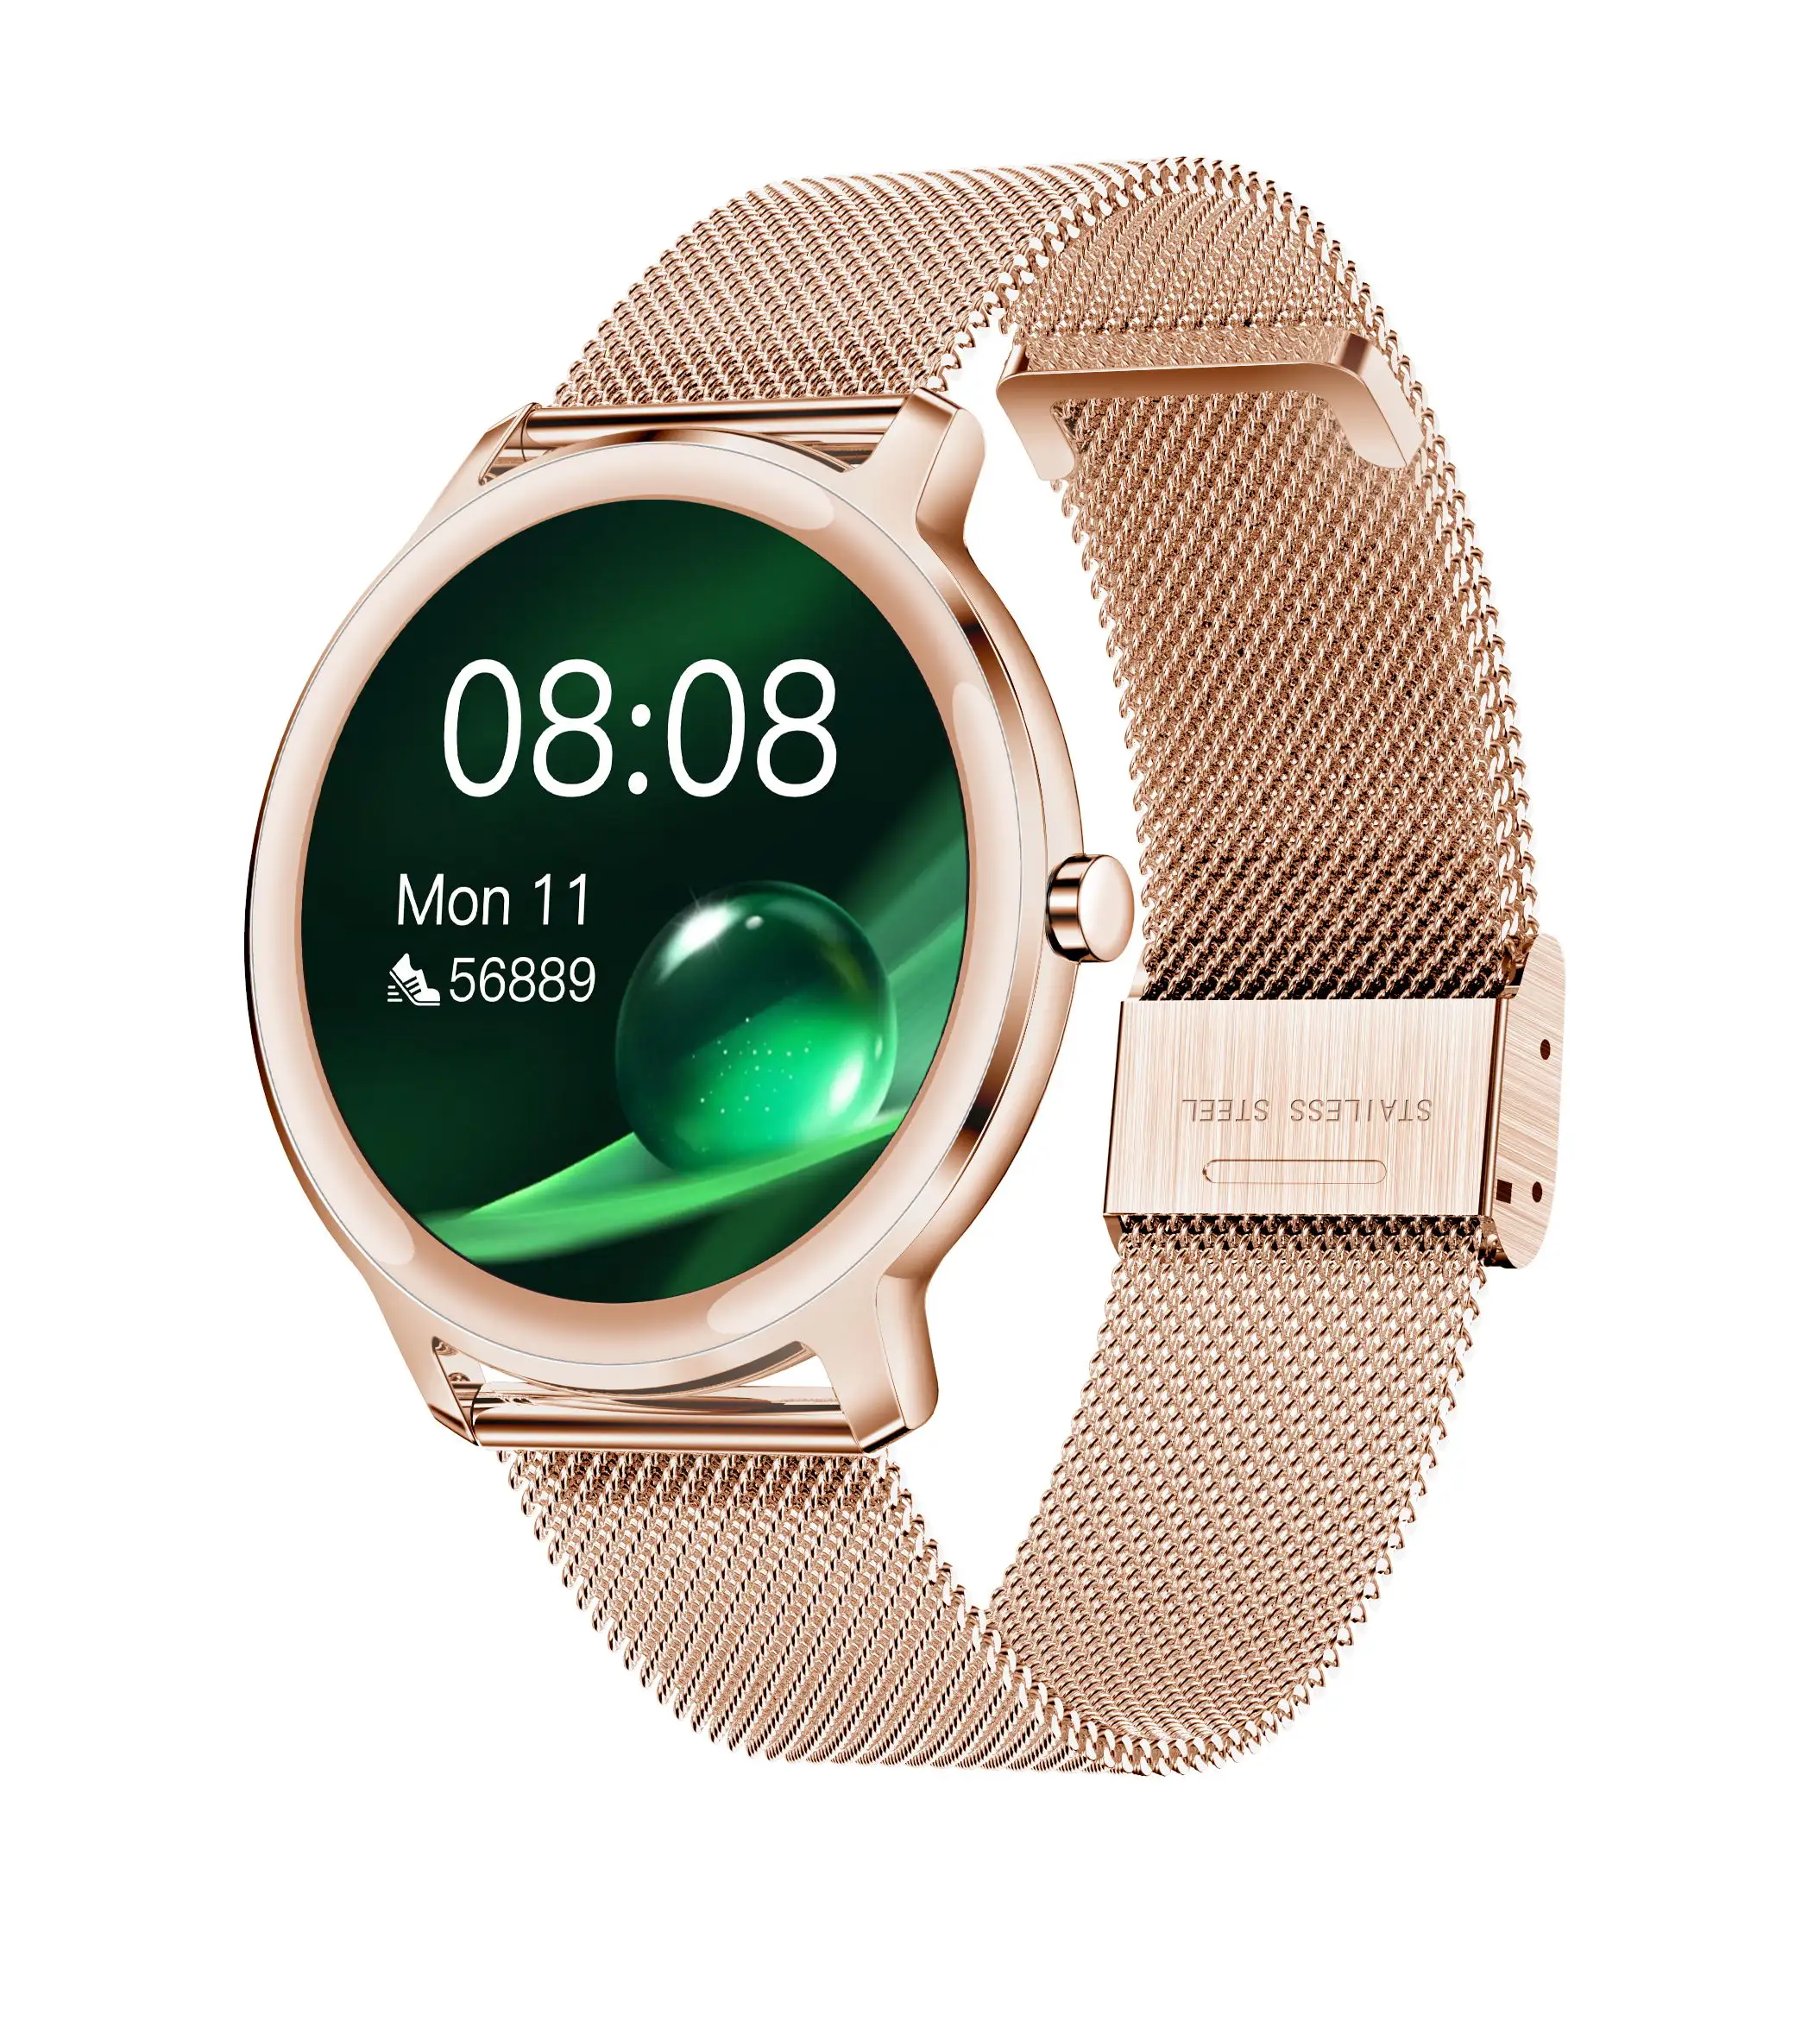 R18 Smartwatch Fitness Tracker Smart Bracelet Heart Rate Wrist Band Display Women's Smart Watch With Play